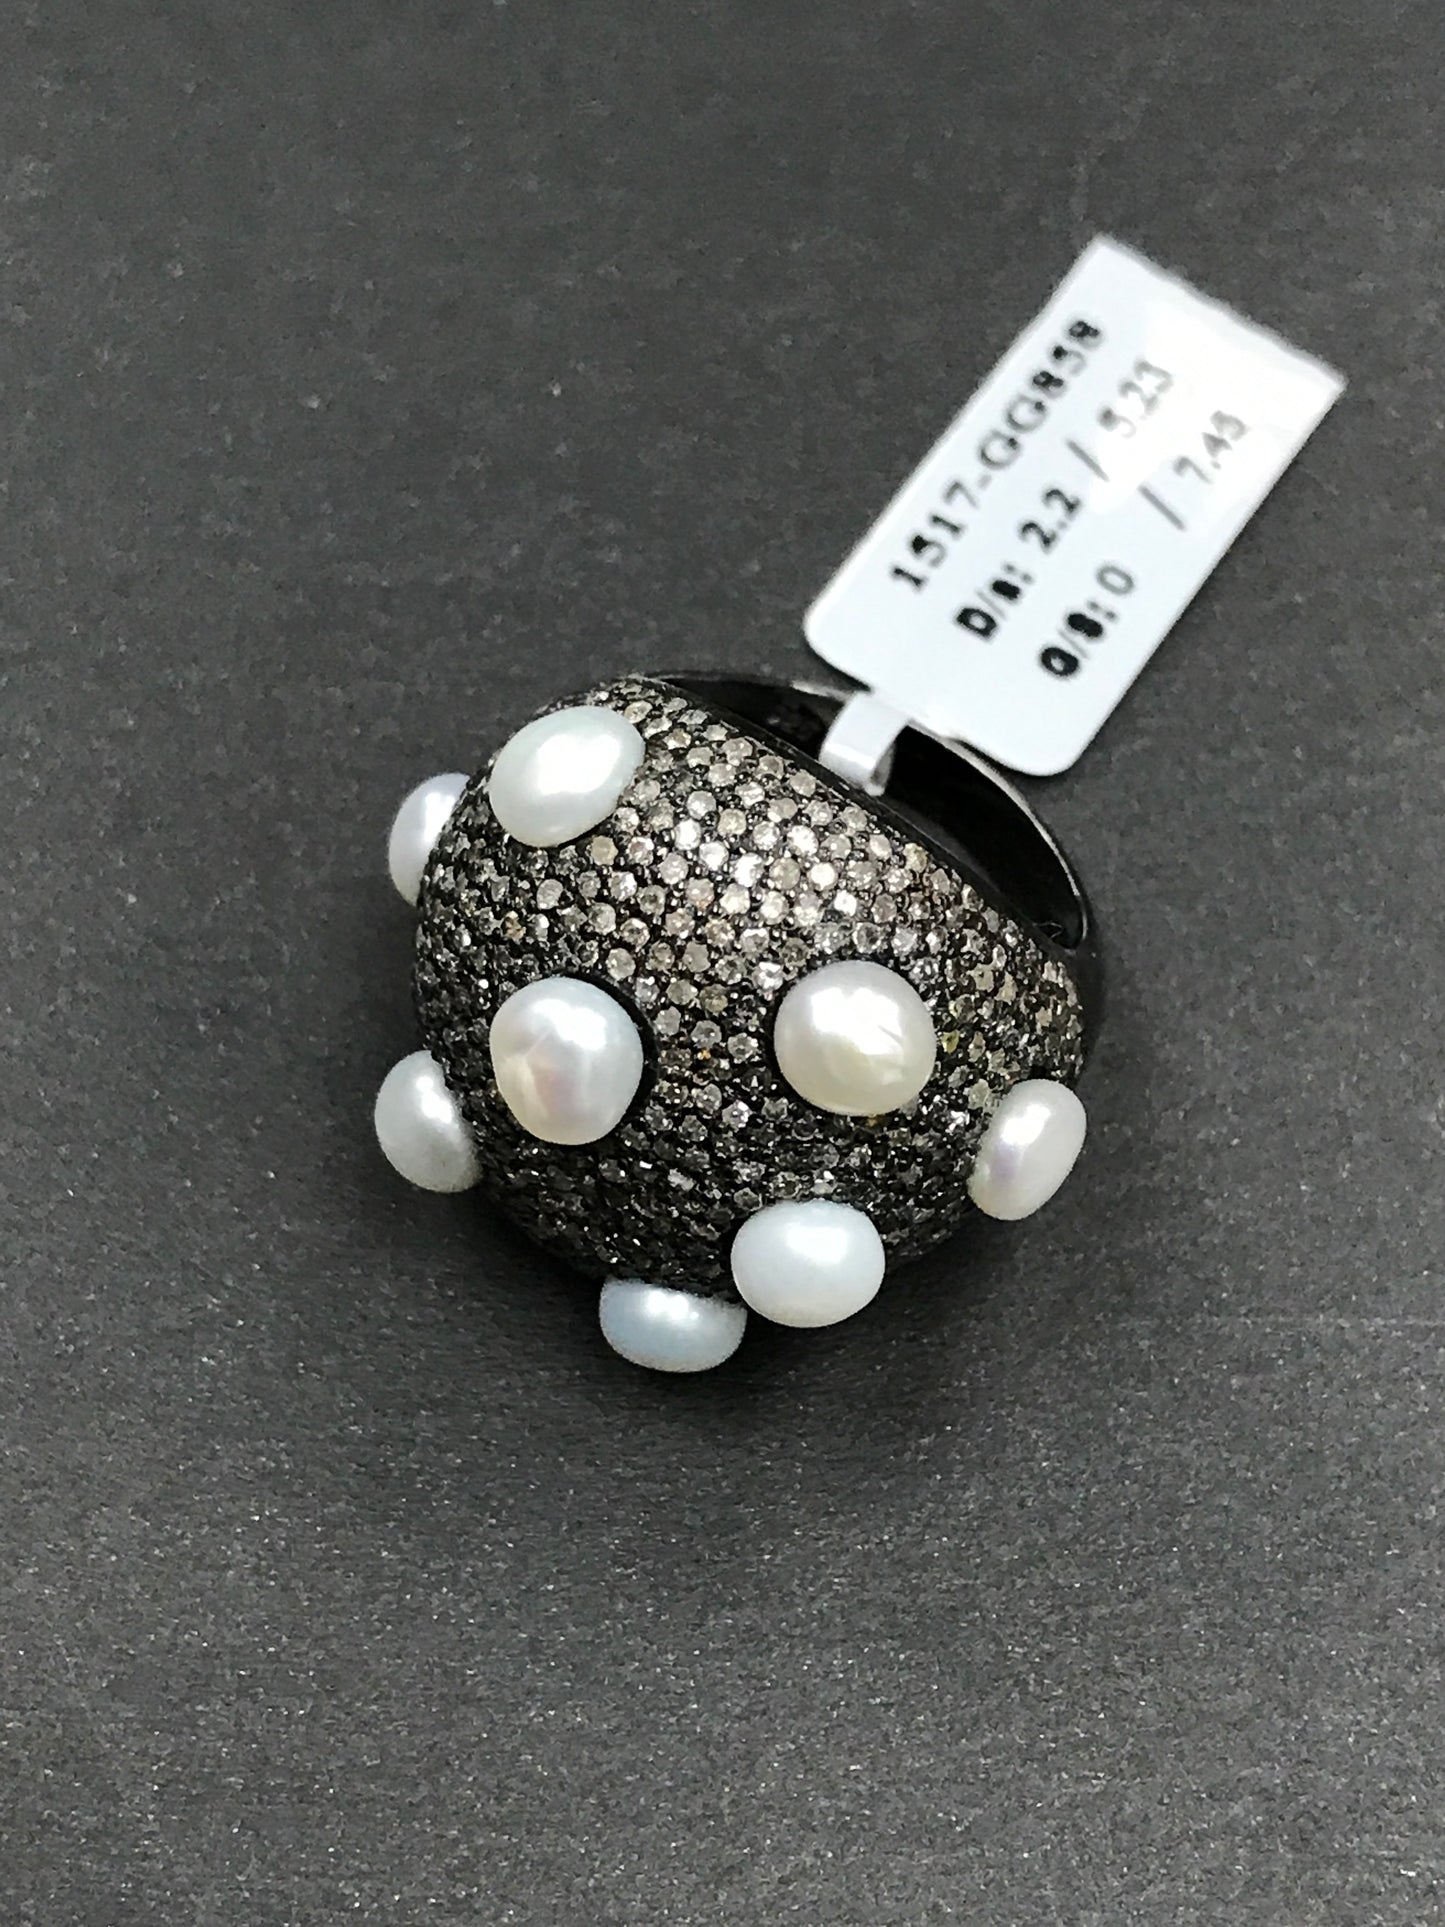 Diamond Dome Diamond Ring with Pearls, Pave Diamond Ring, Pave Dome Ring with Pearls, Approx 19 x 24mm. Sterling Silver